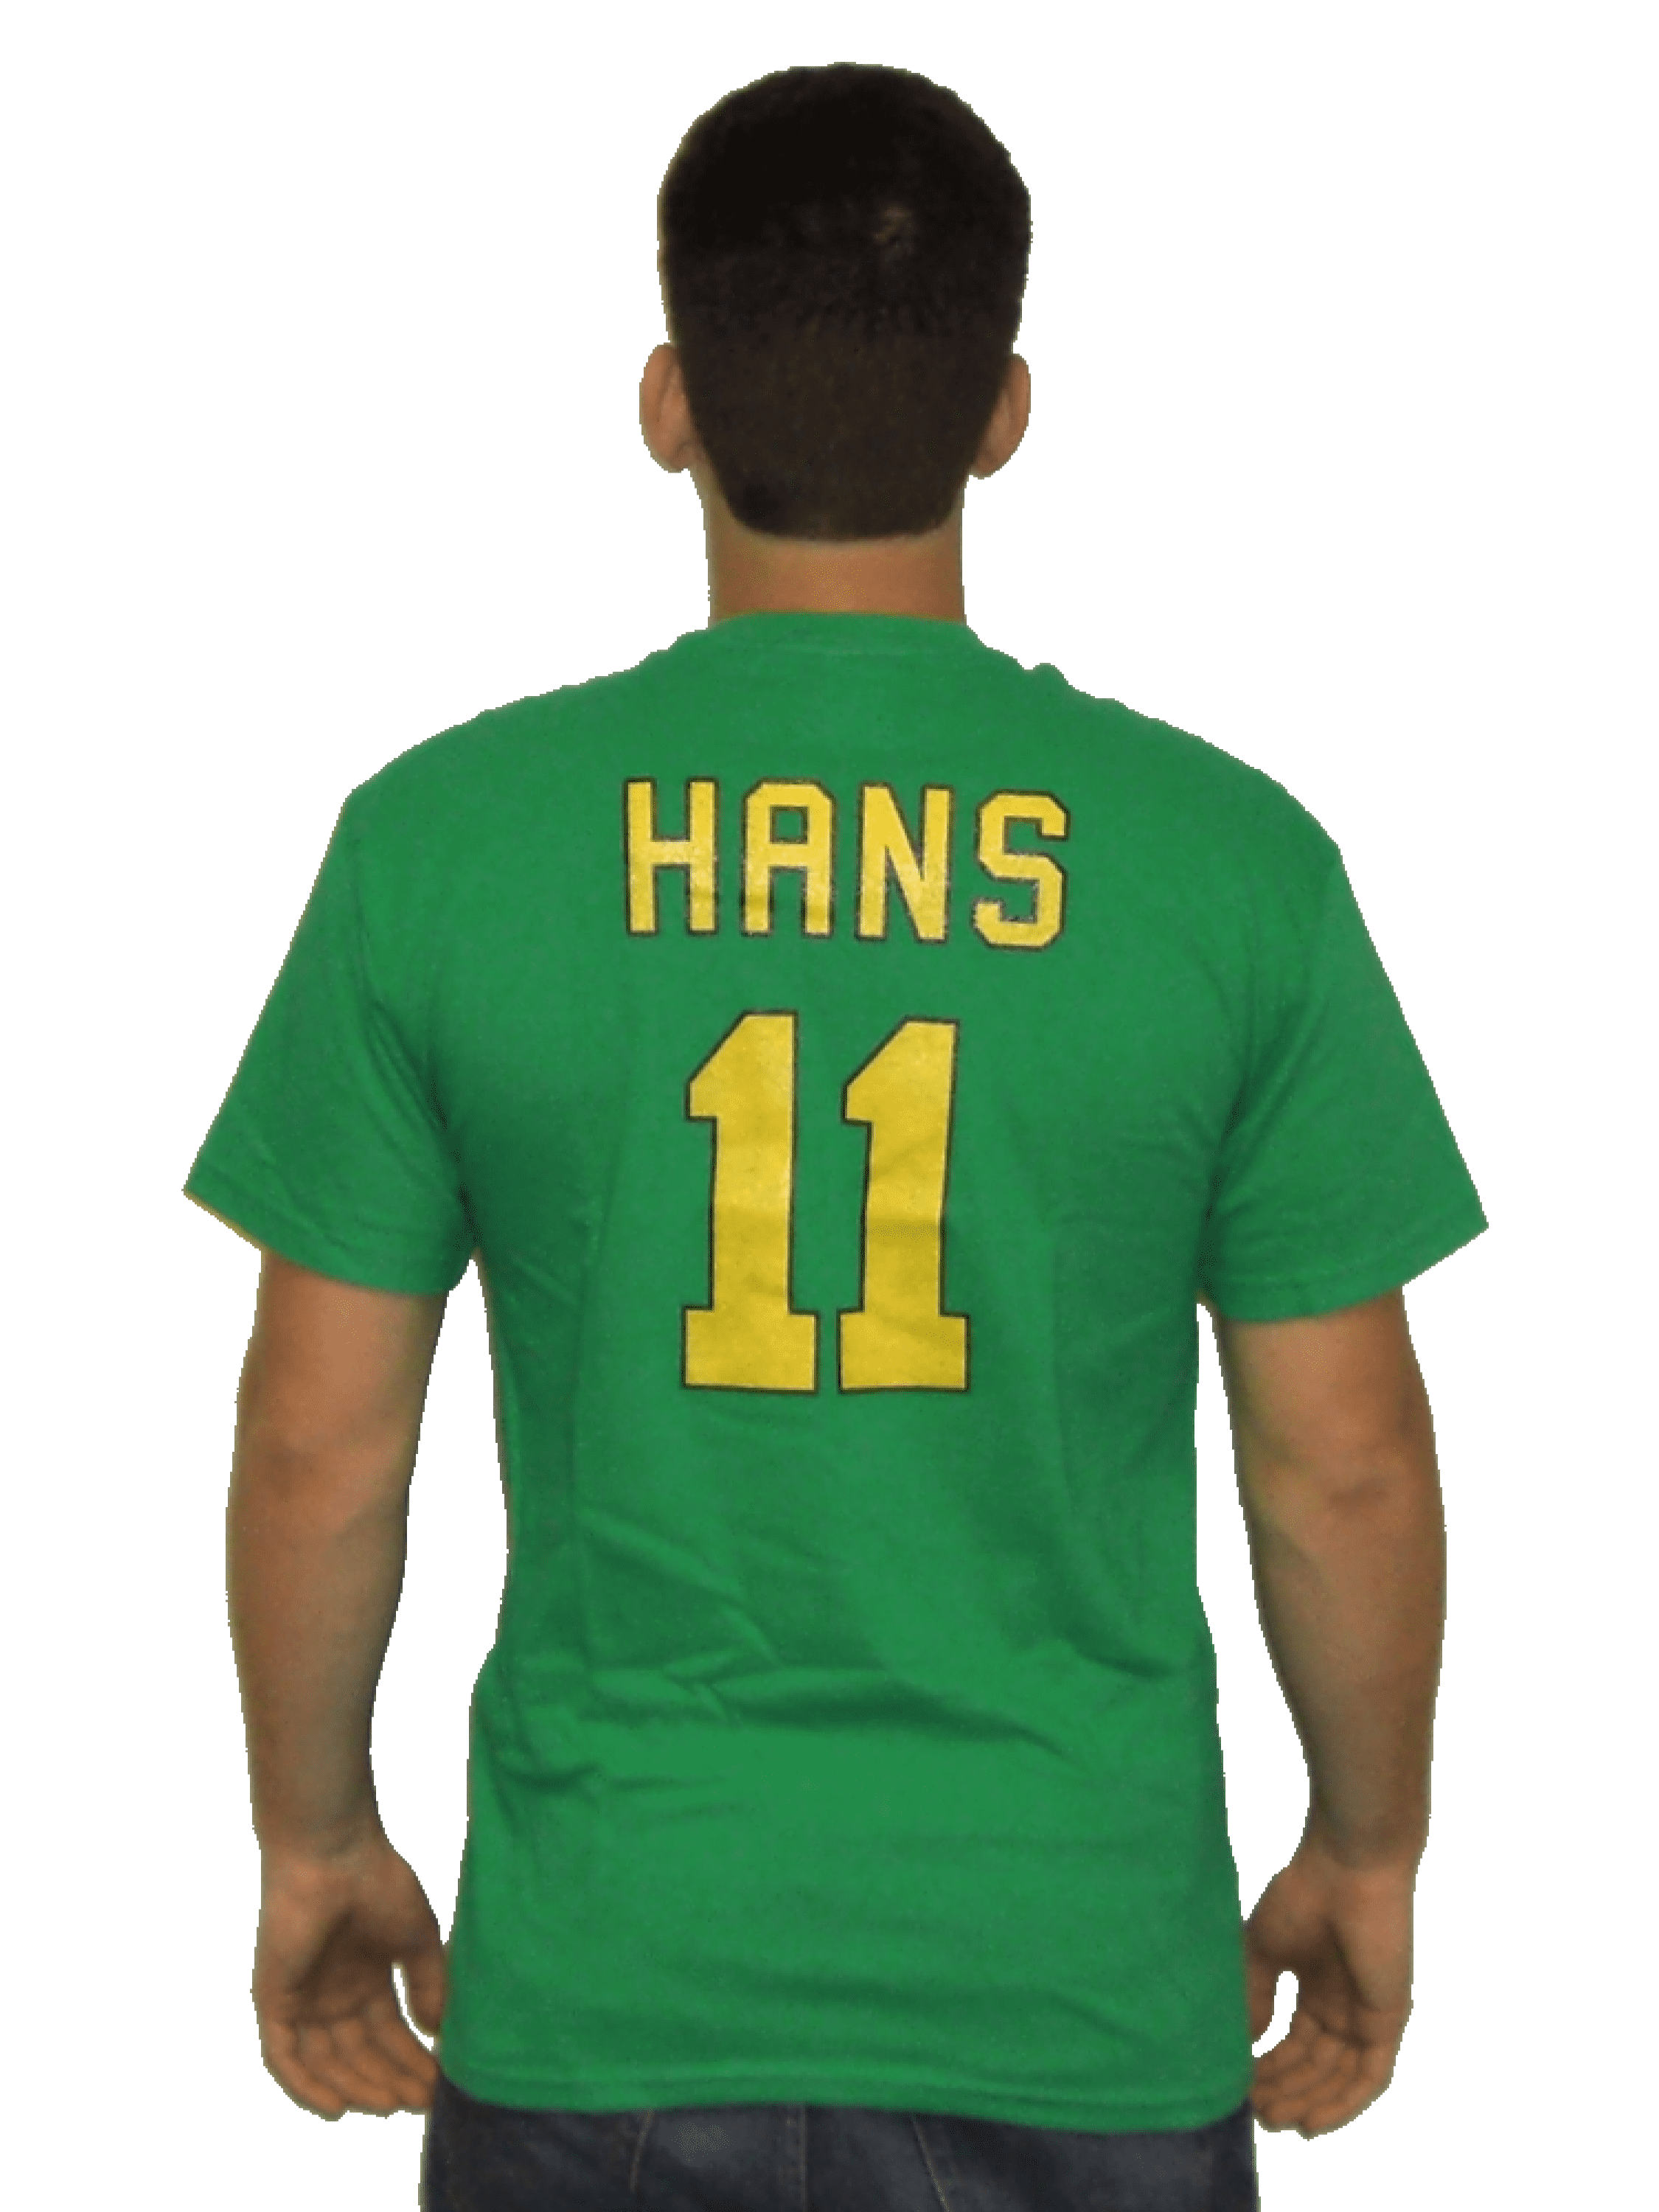 Hans #11 Mighty Ducks Movie Jersey T-Shirt Hockey Skate Shop Owner Costume Gift